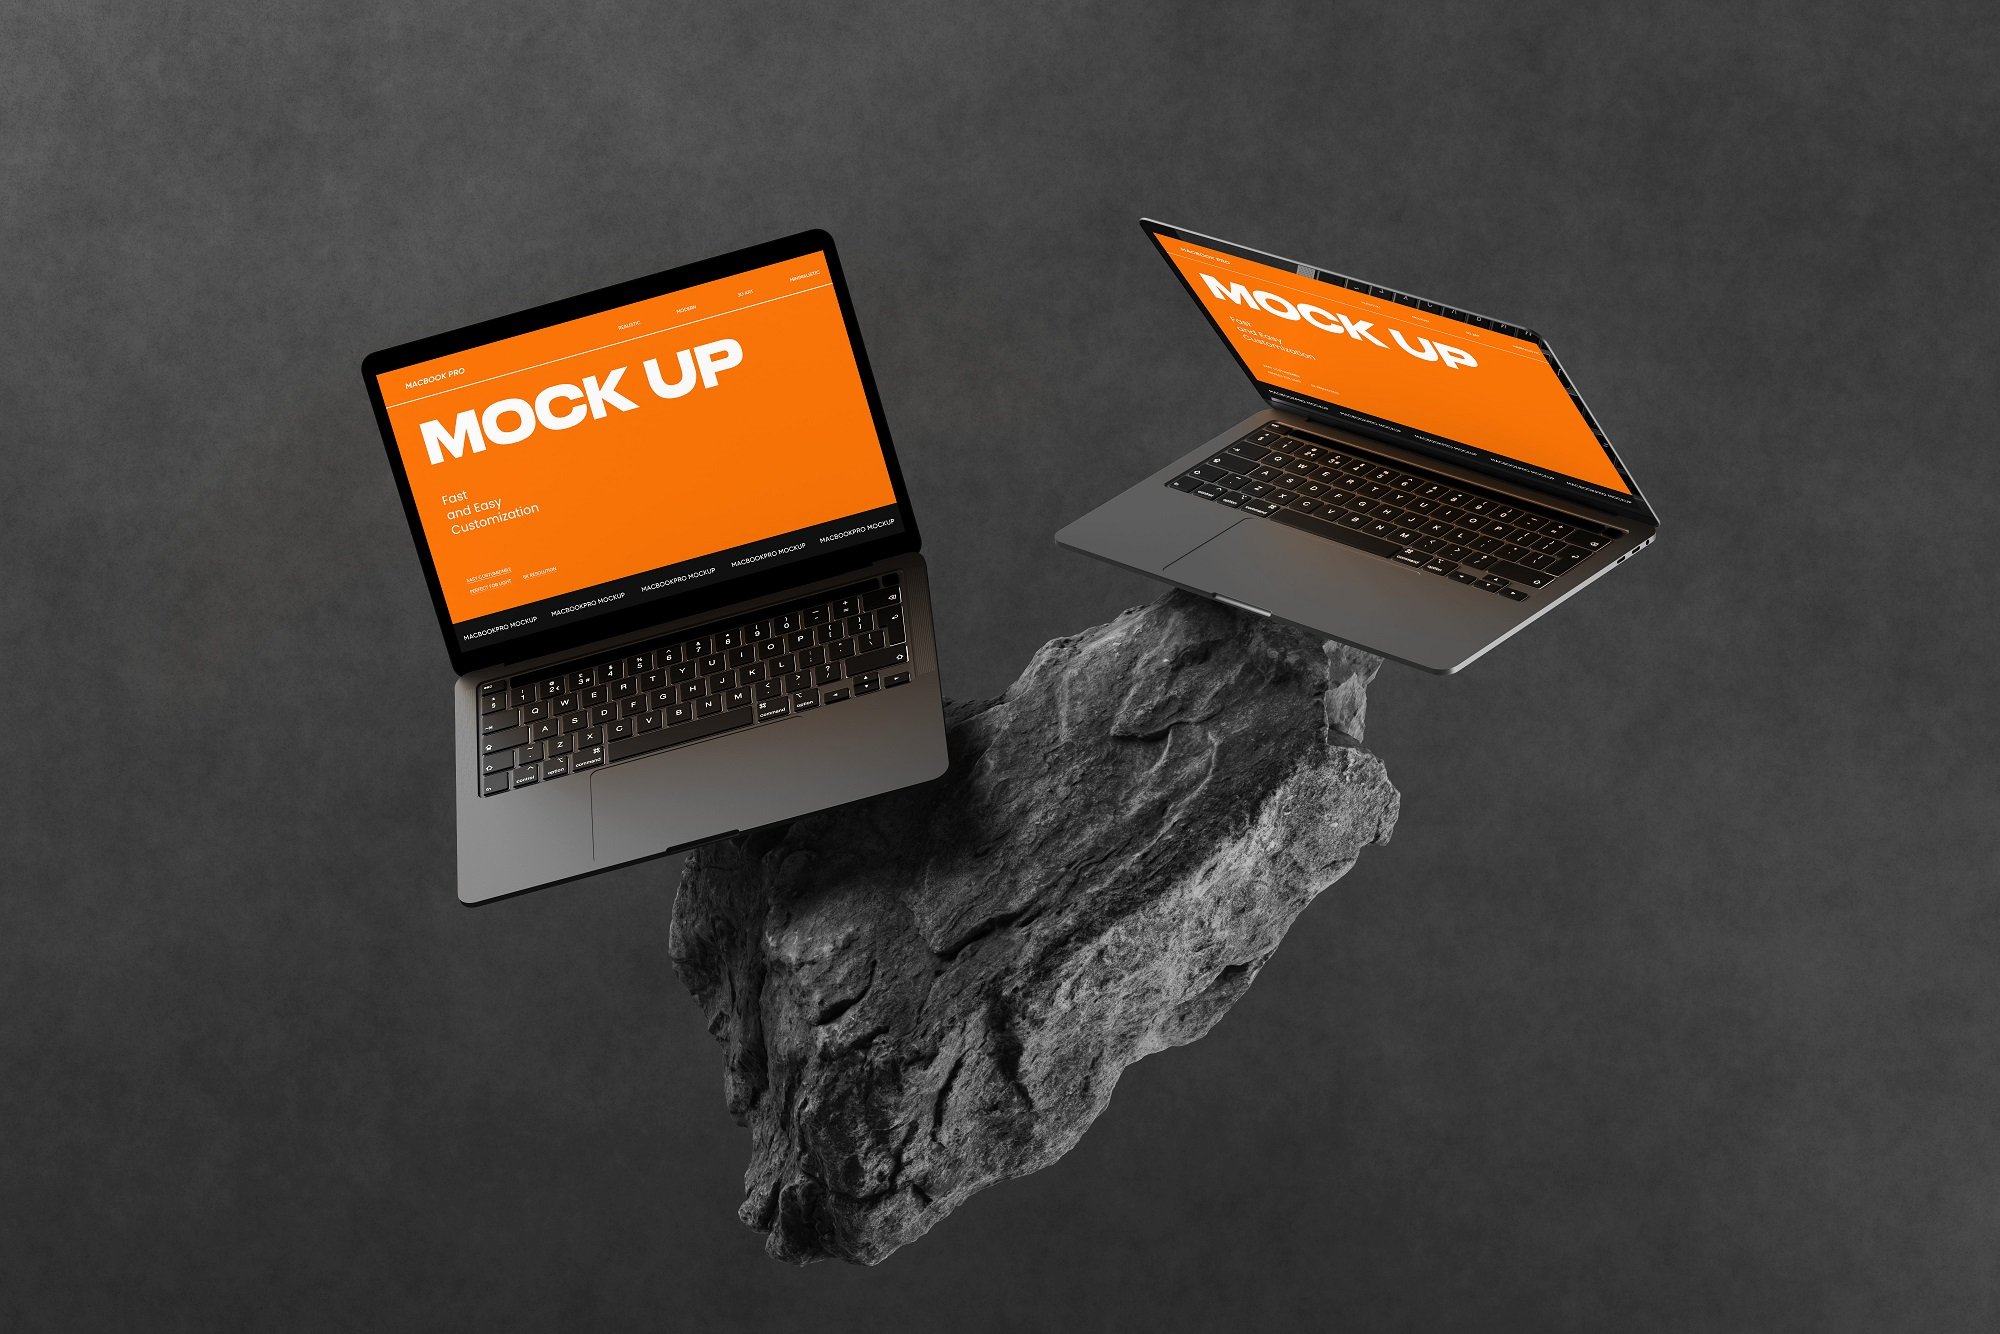 Macbook Pro Mockup Vol.8 preview image.